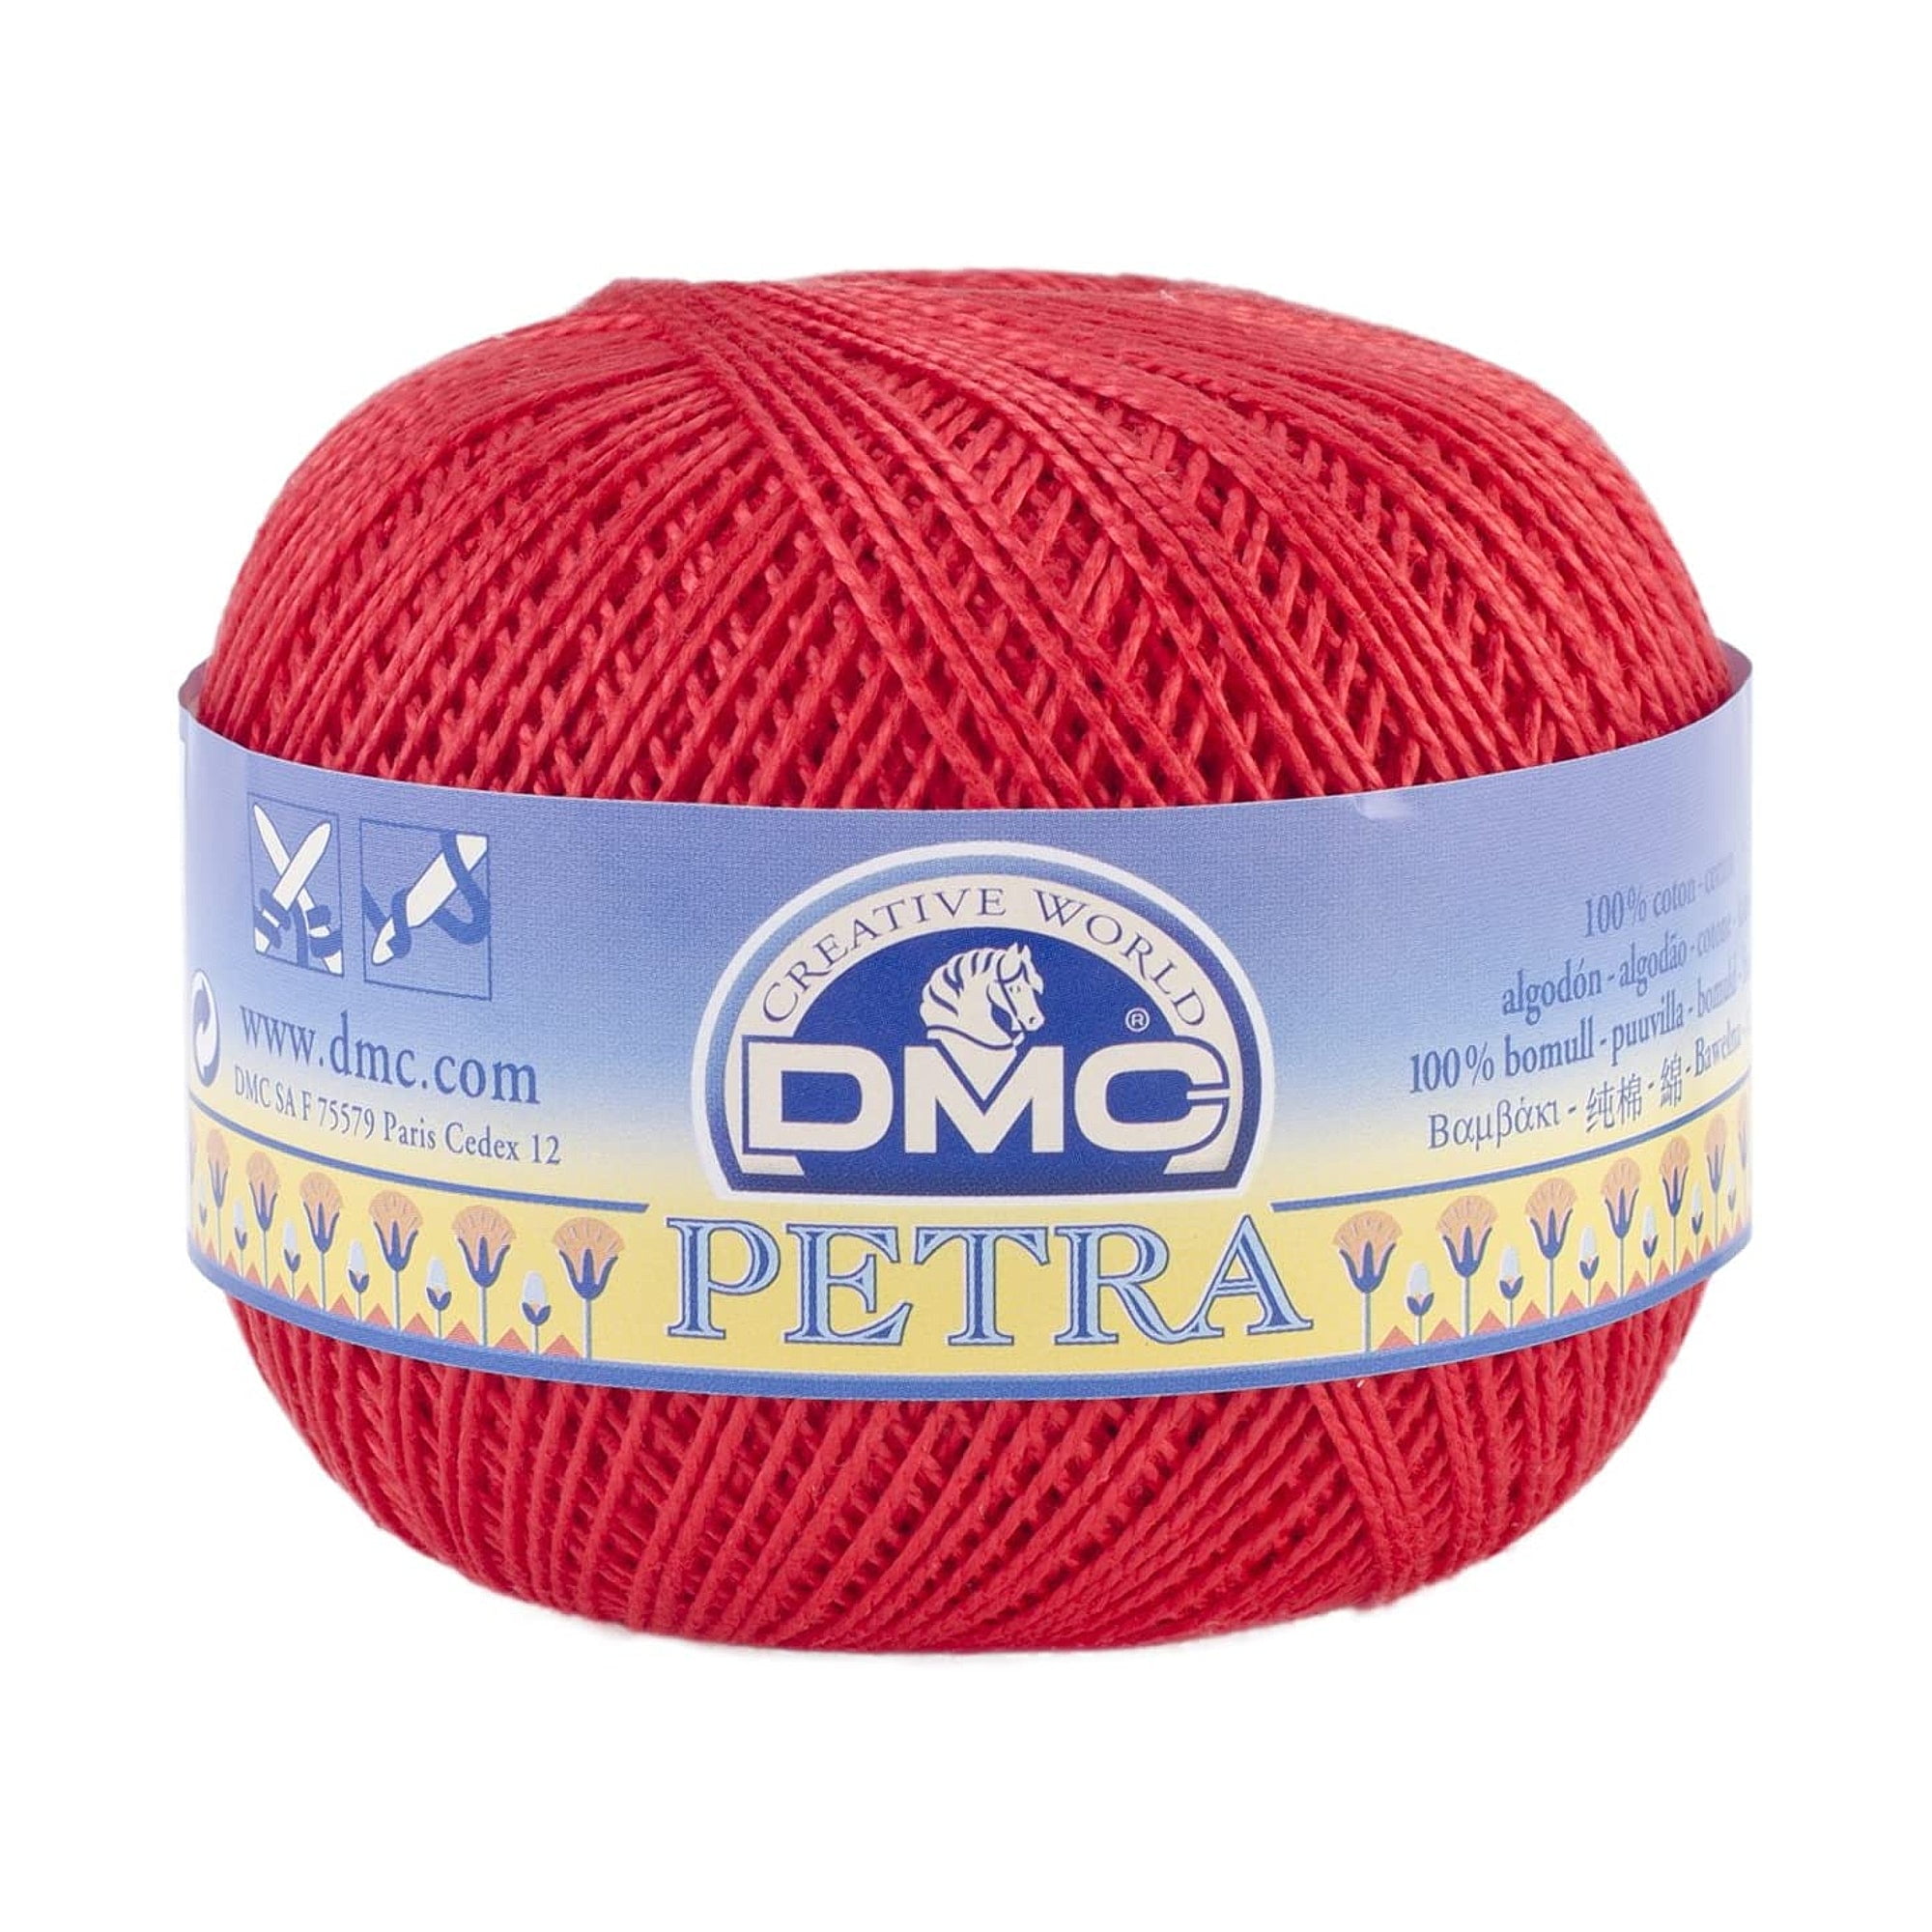 DMC/Petra Crochet Cotton Thread Size 3-54458 993B3-54458 